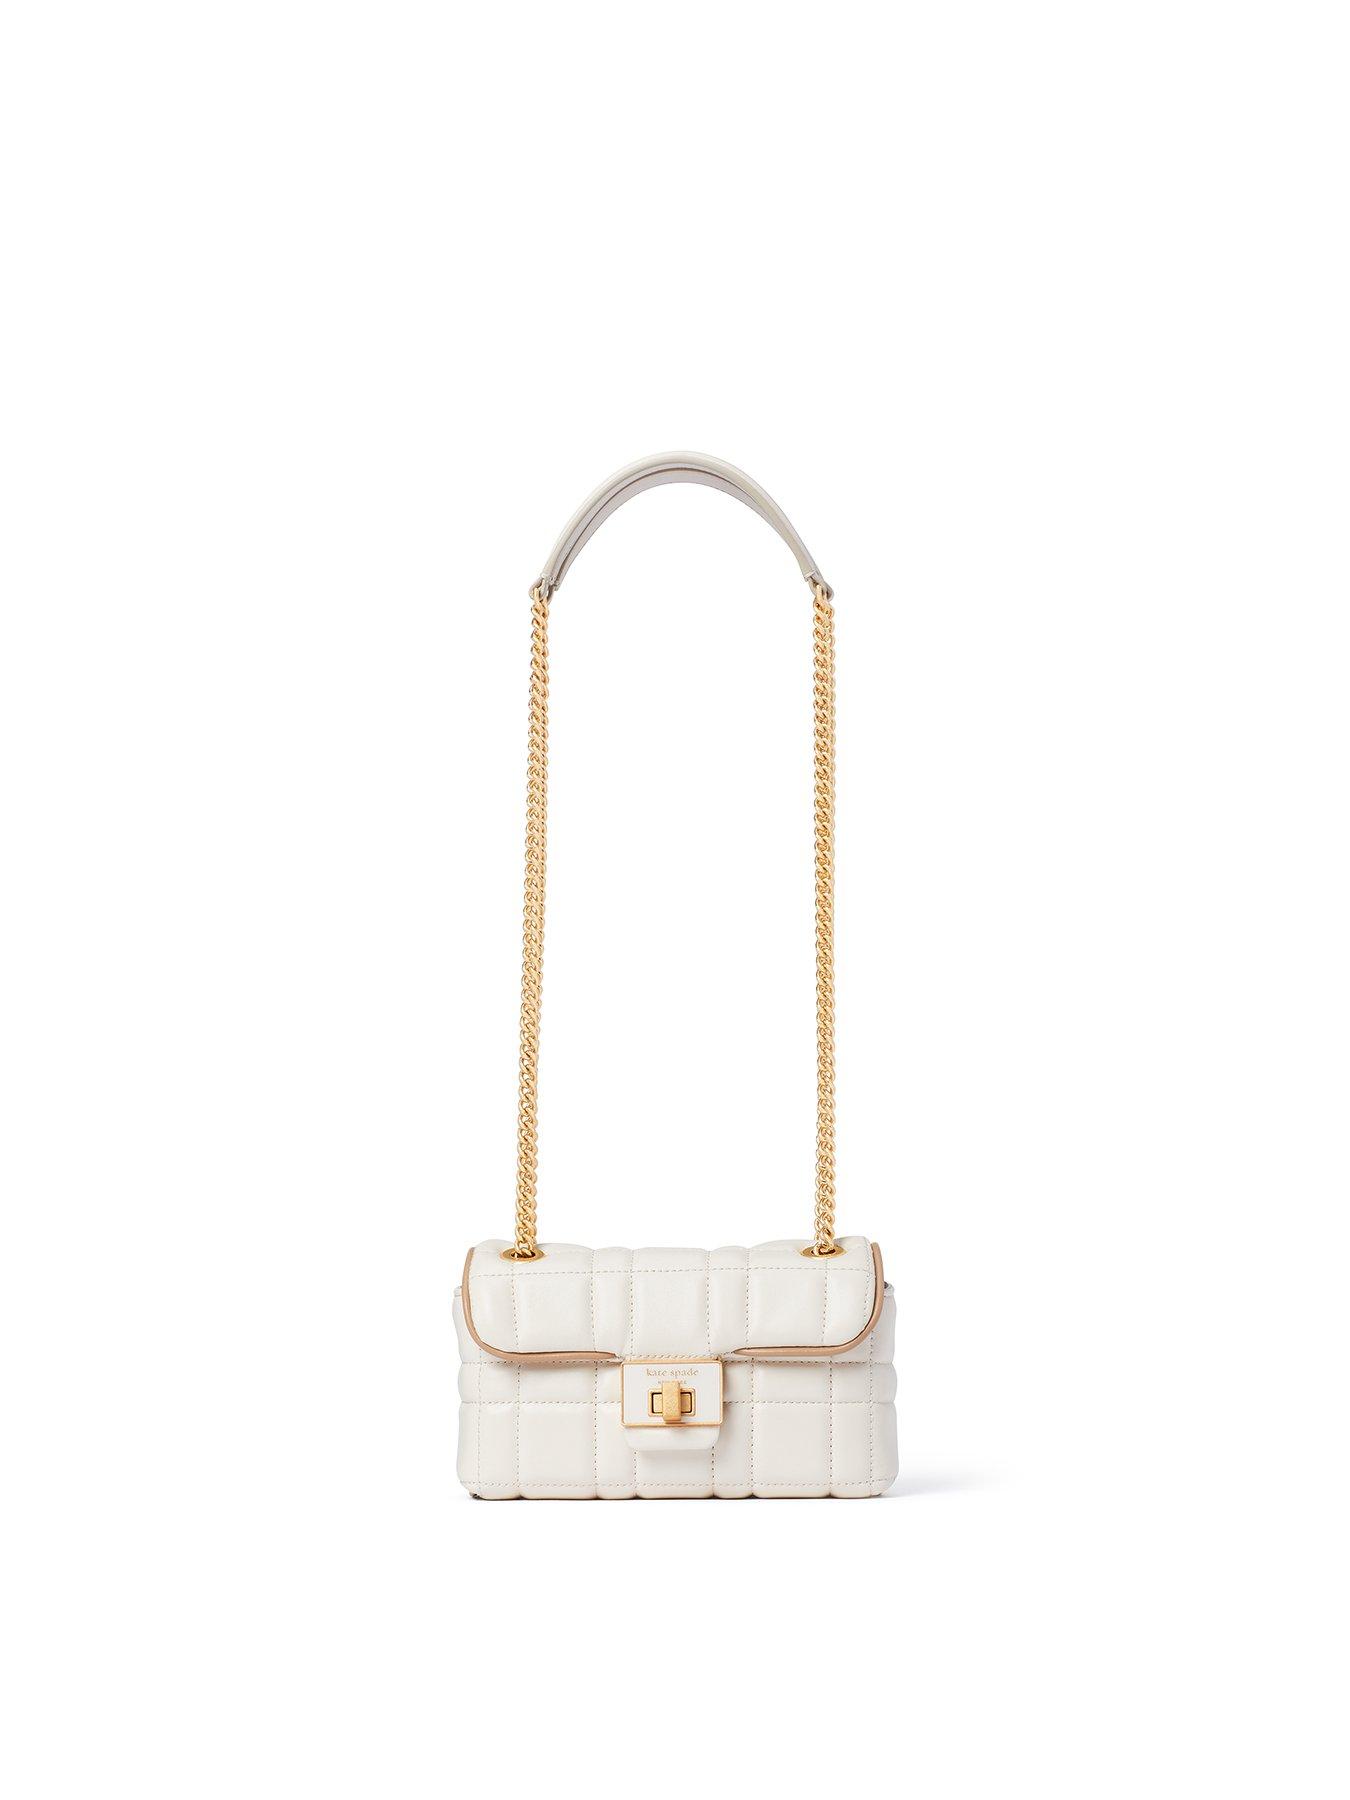 Kate spade new york | Bags & purses | Designer brands 